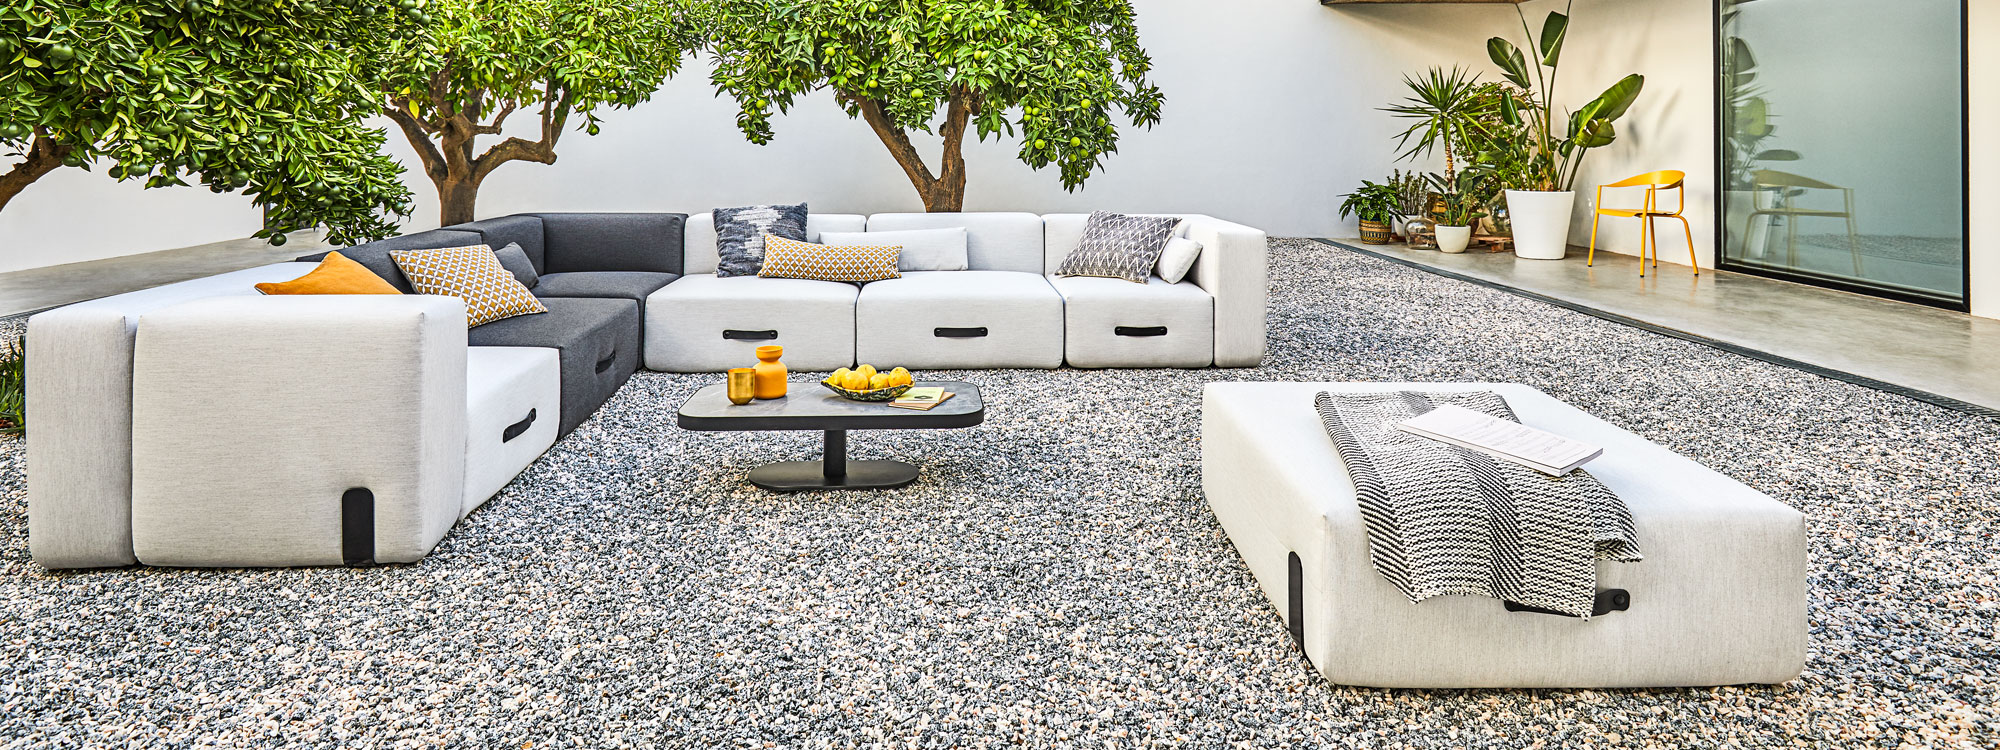 Grey & Anthracite Miami outdoor corner sofa on gravel courtyard beneath orange trees